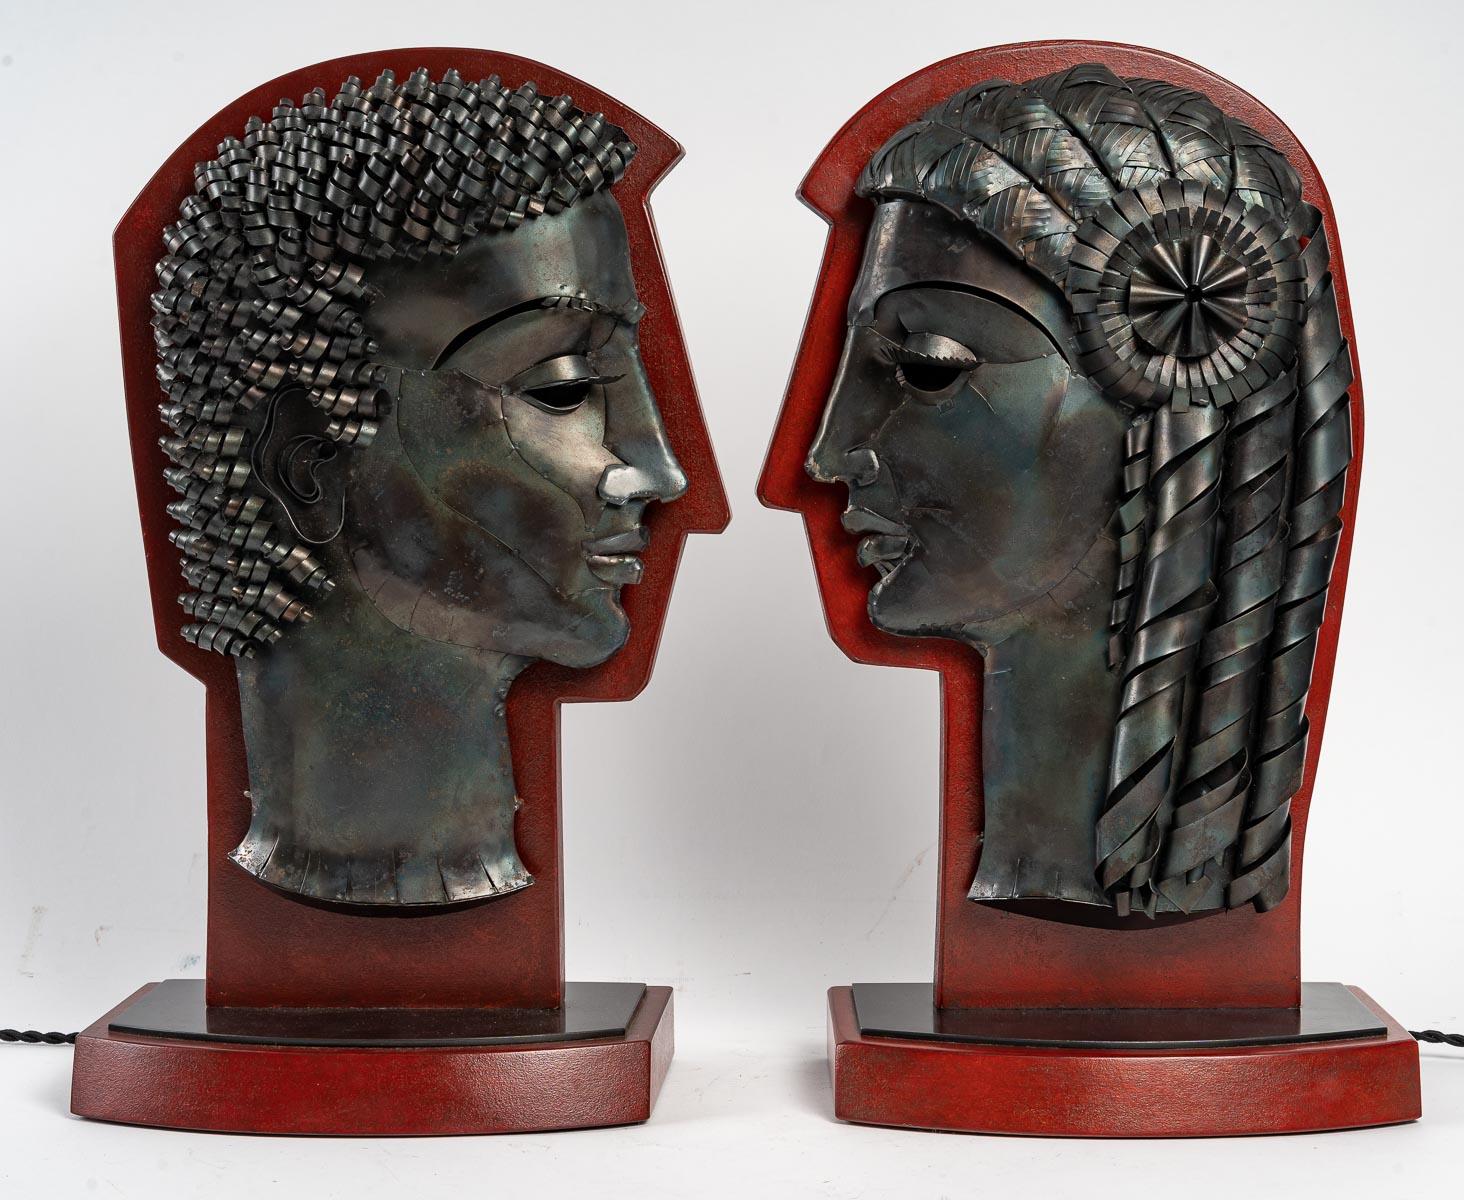 Two heads by Léon Masson